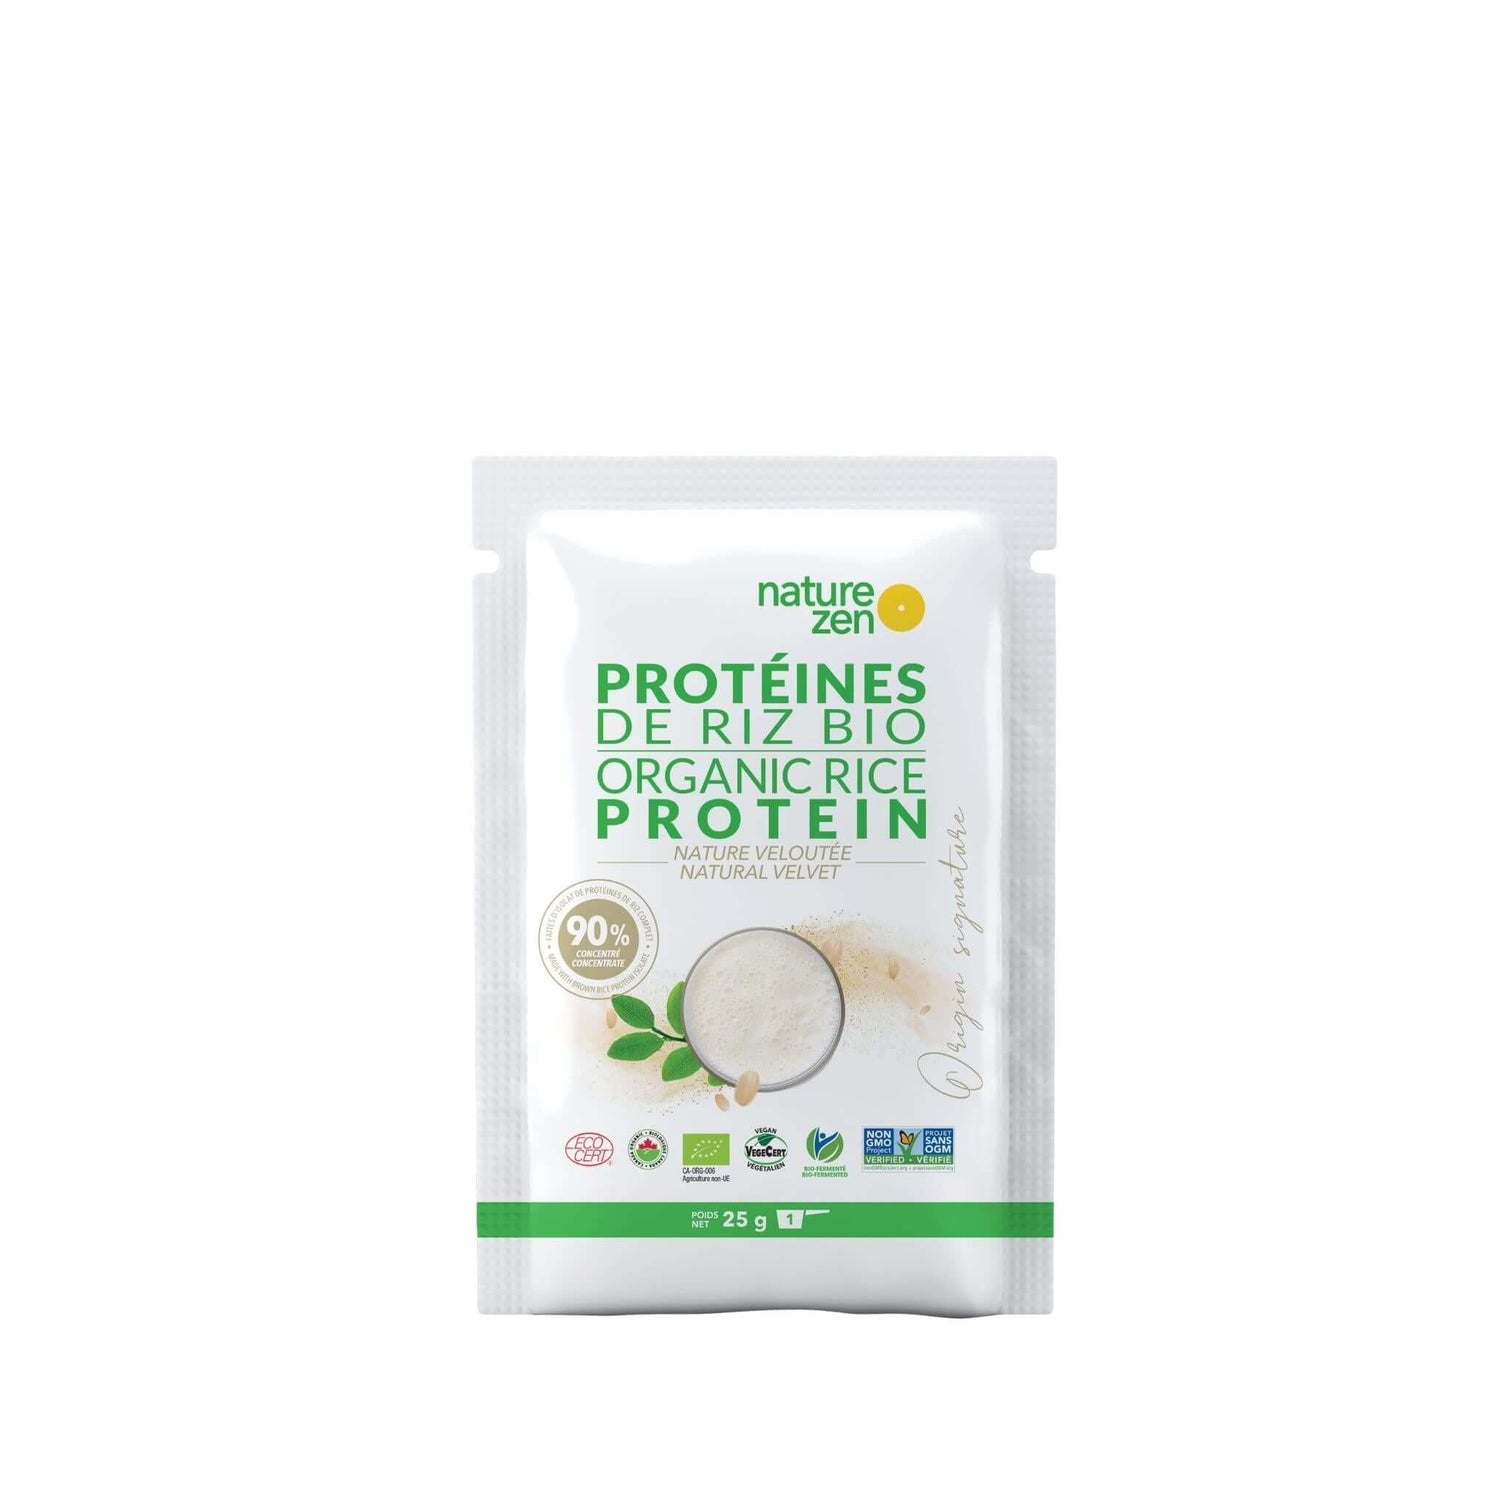 Nature Zen Origin - Organic Rice Protein Powder - Natural Velvet mock-up